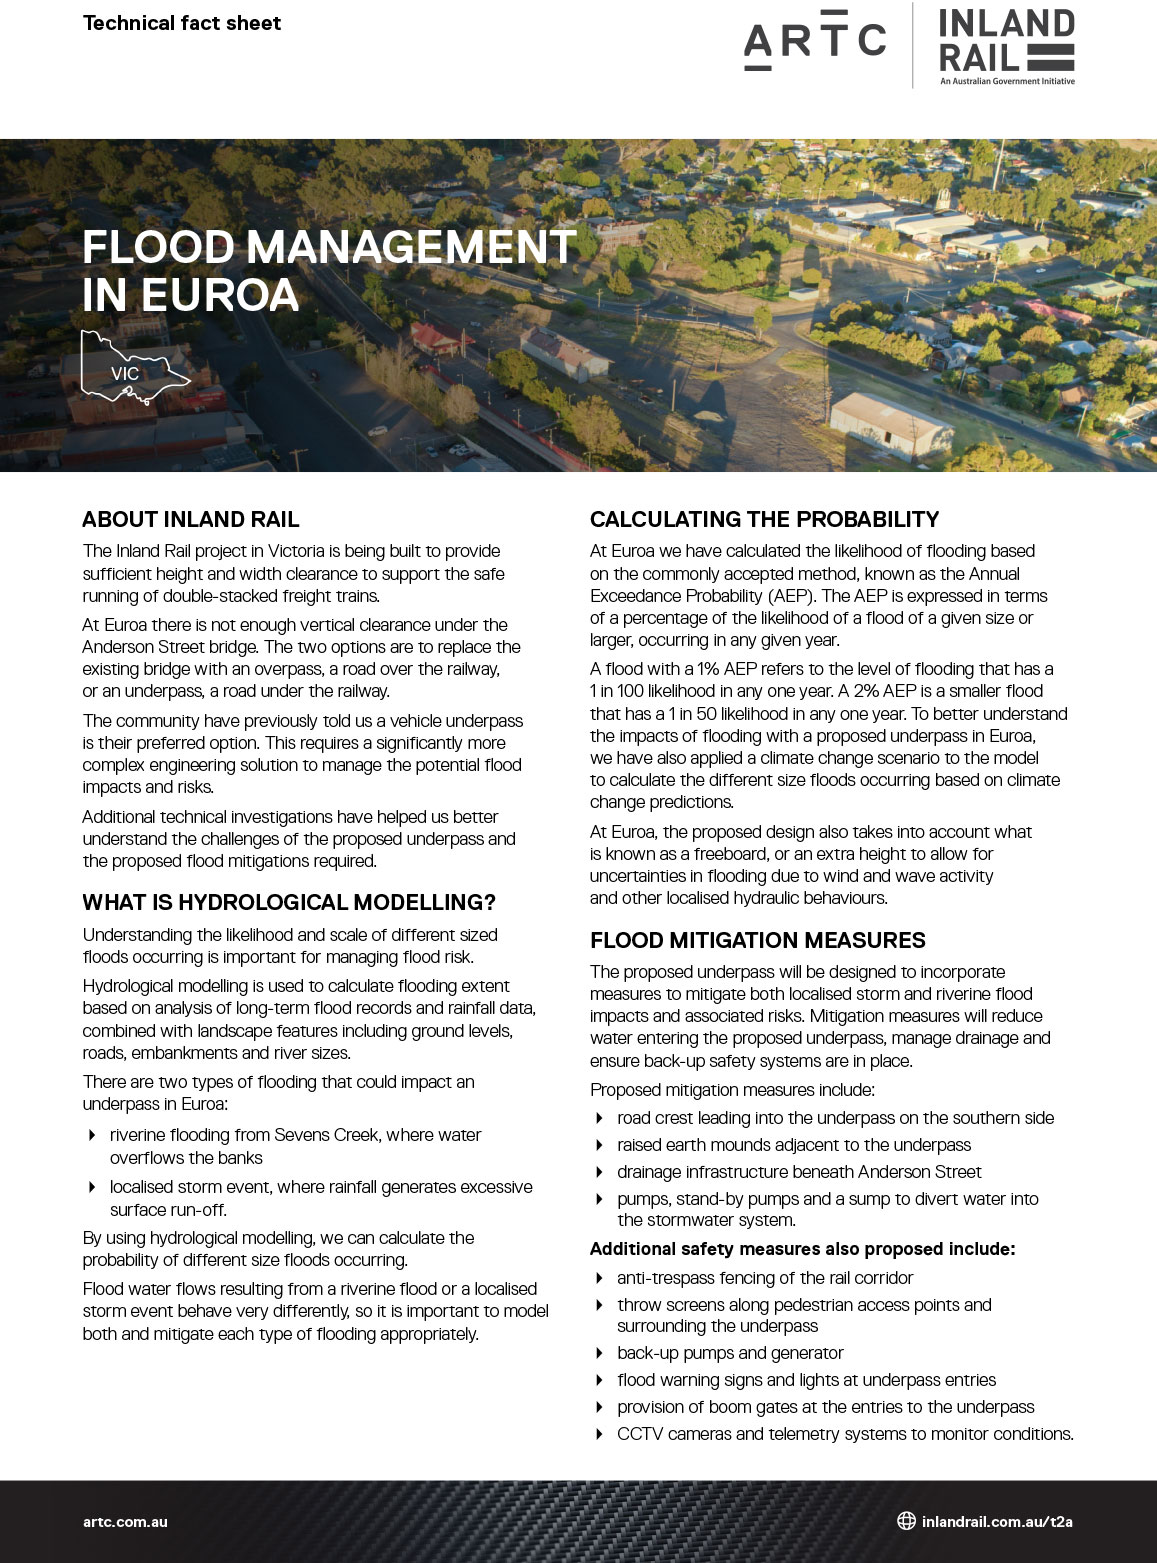 Image thumbnail for Flood Management in Euroa technical fact sheet